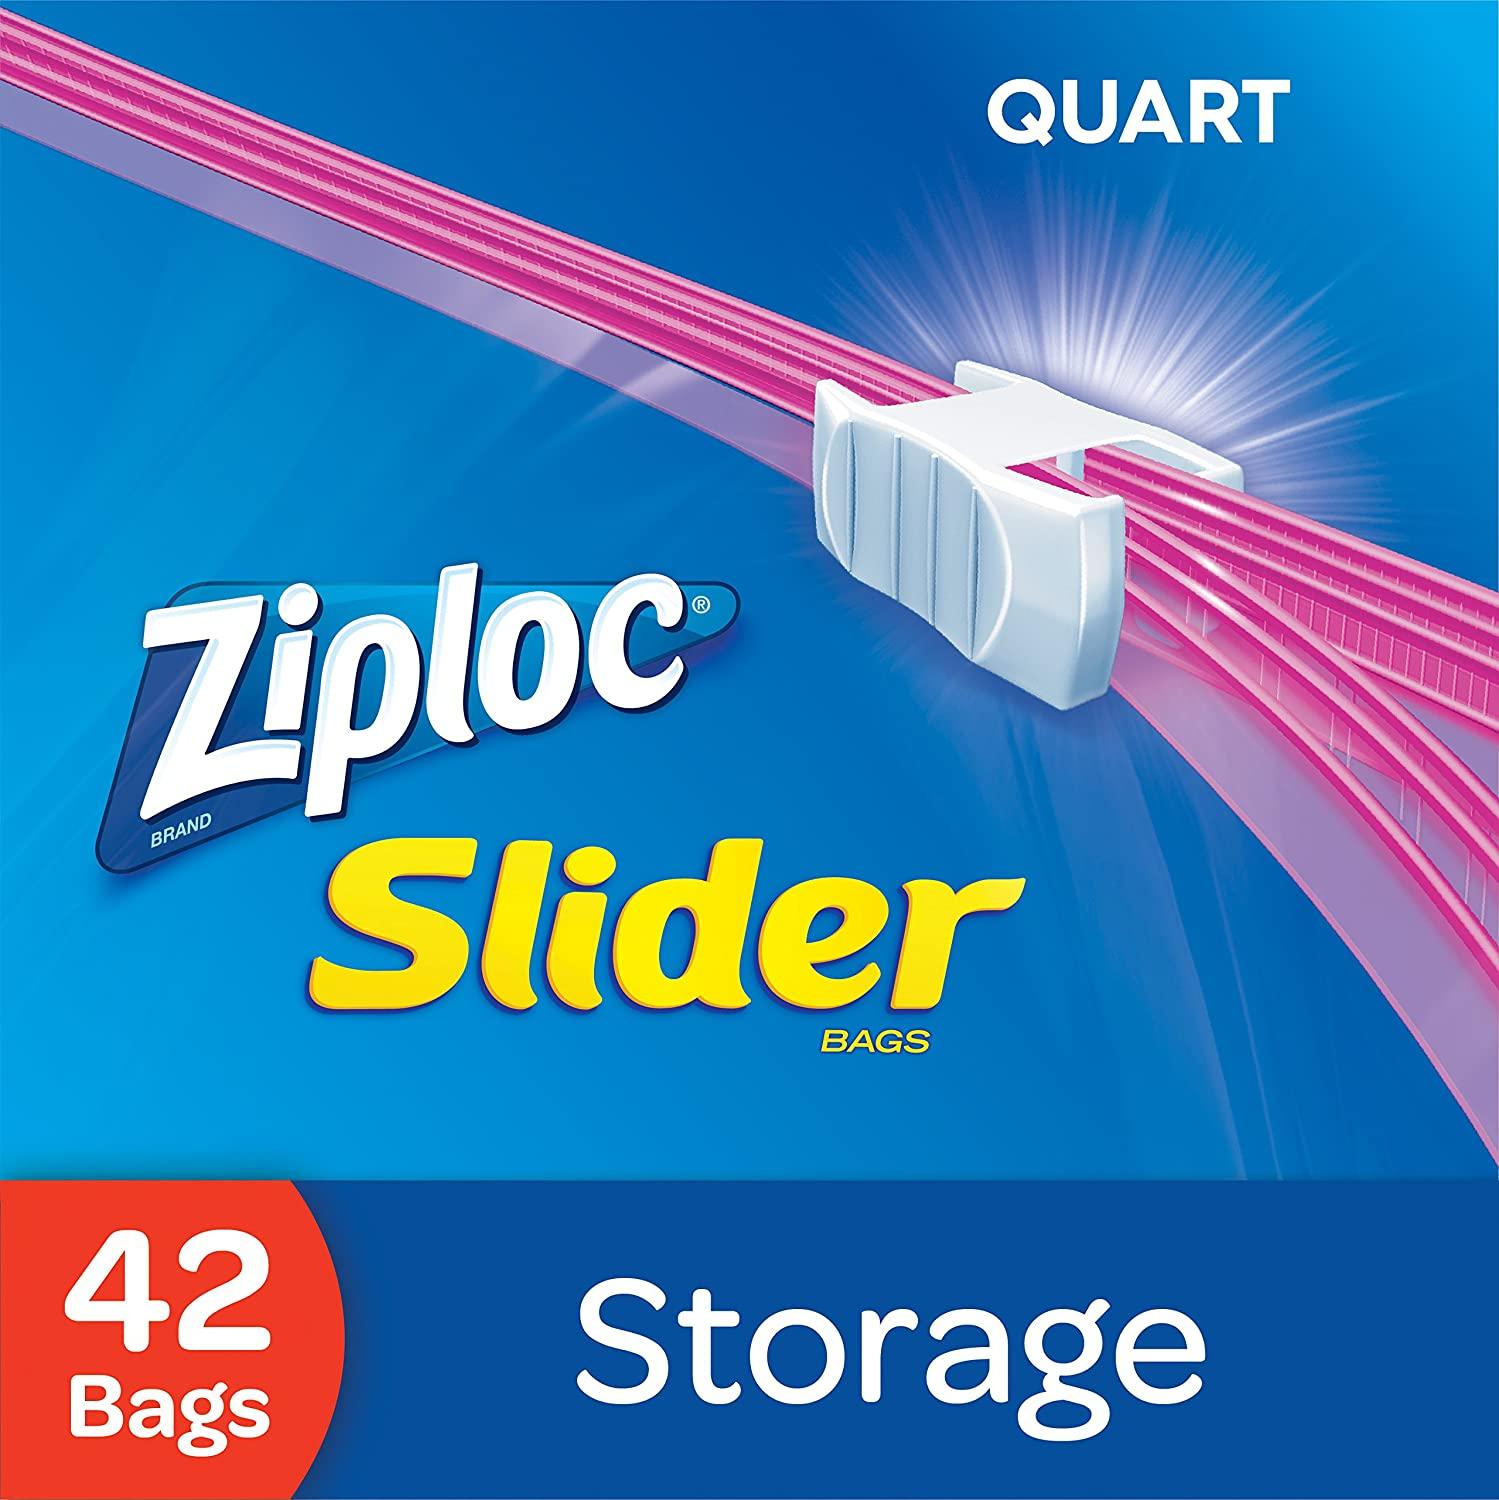  Ziploc Gallon Food Storage Slider Bags, Power Shield